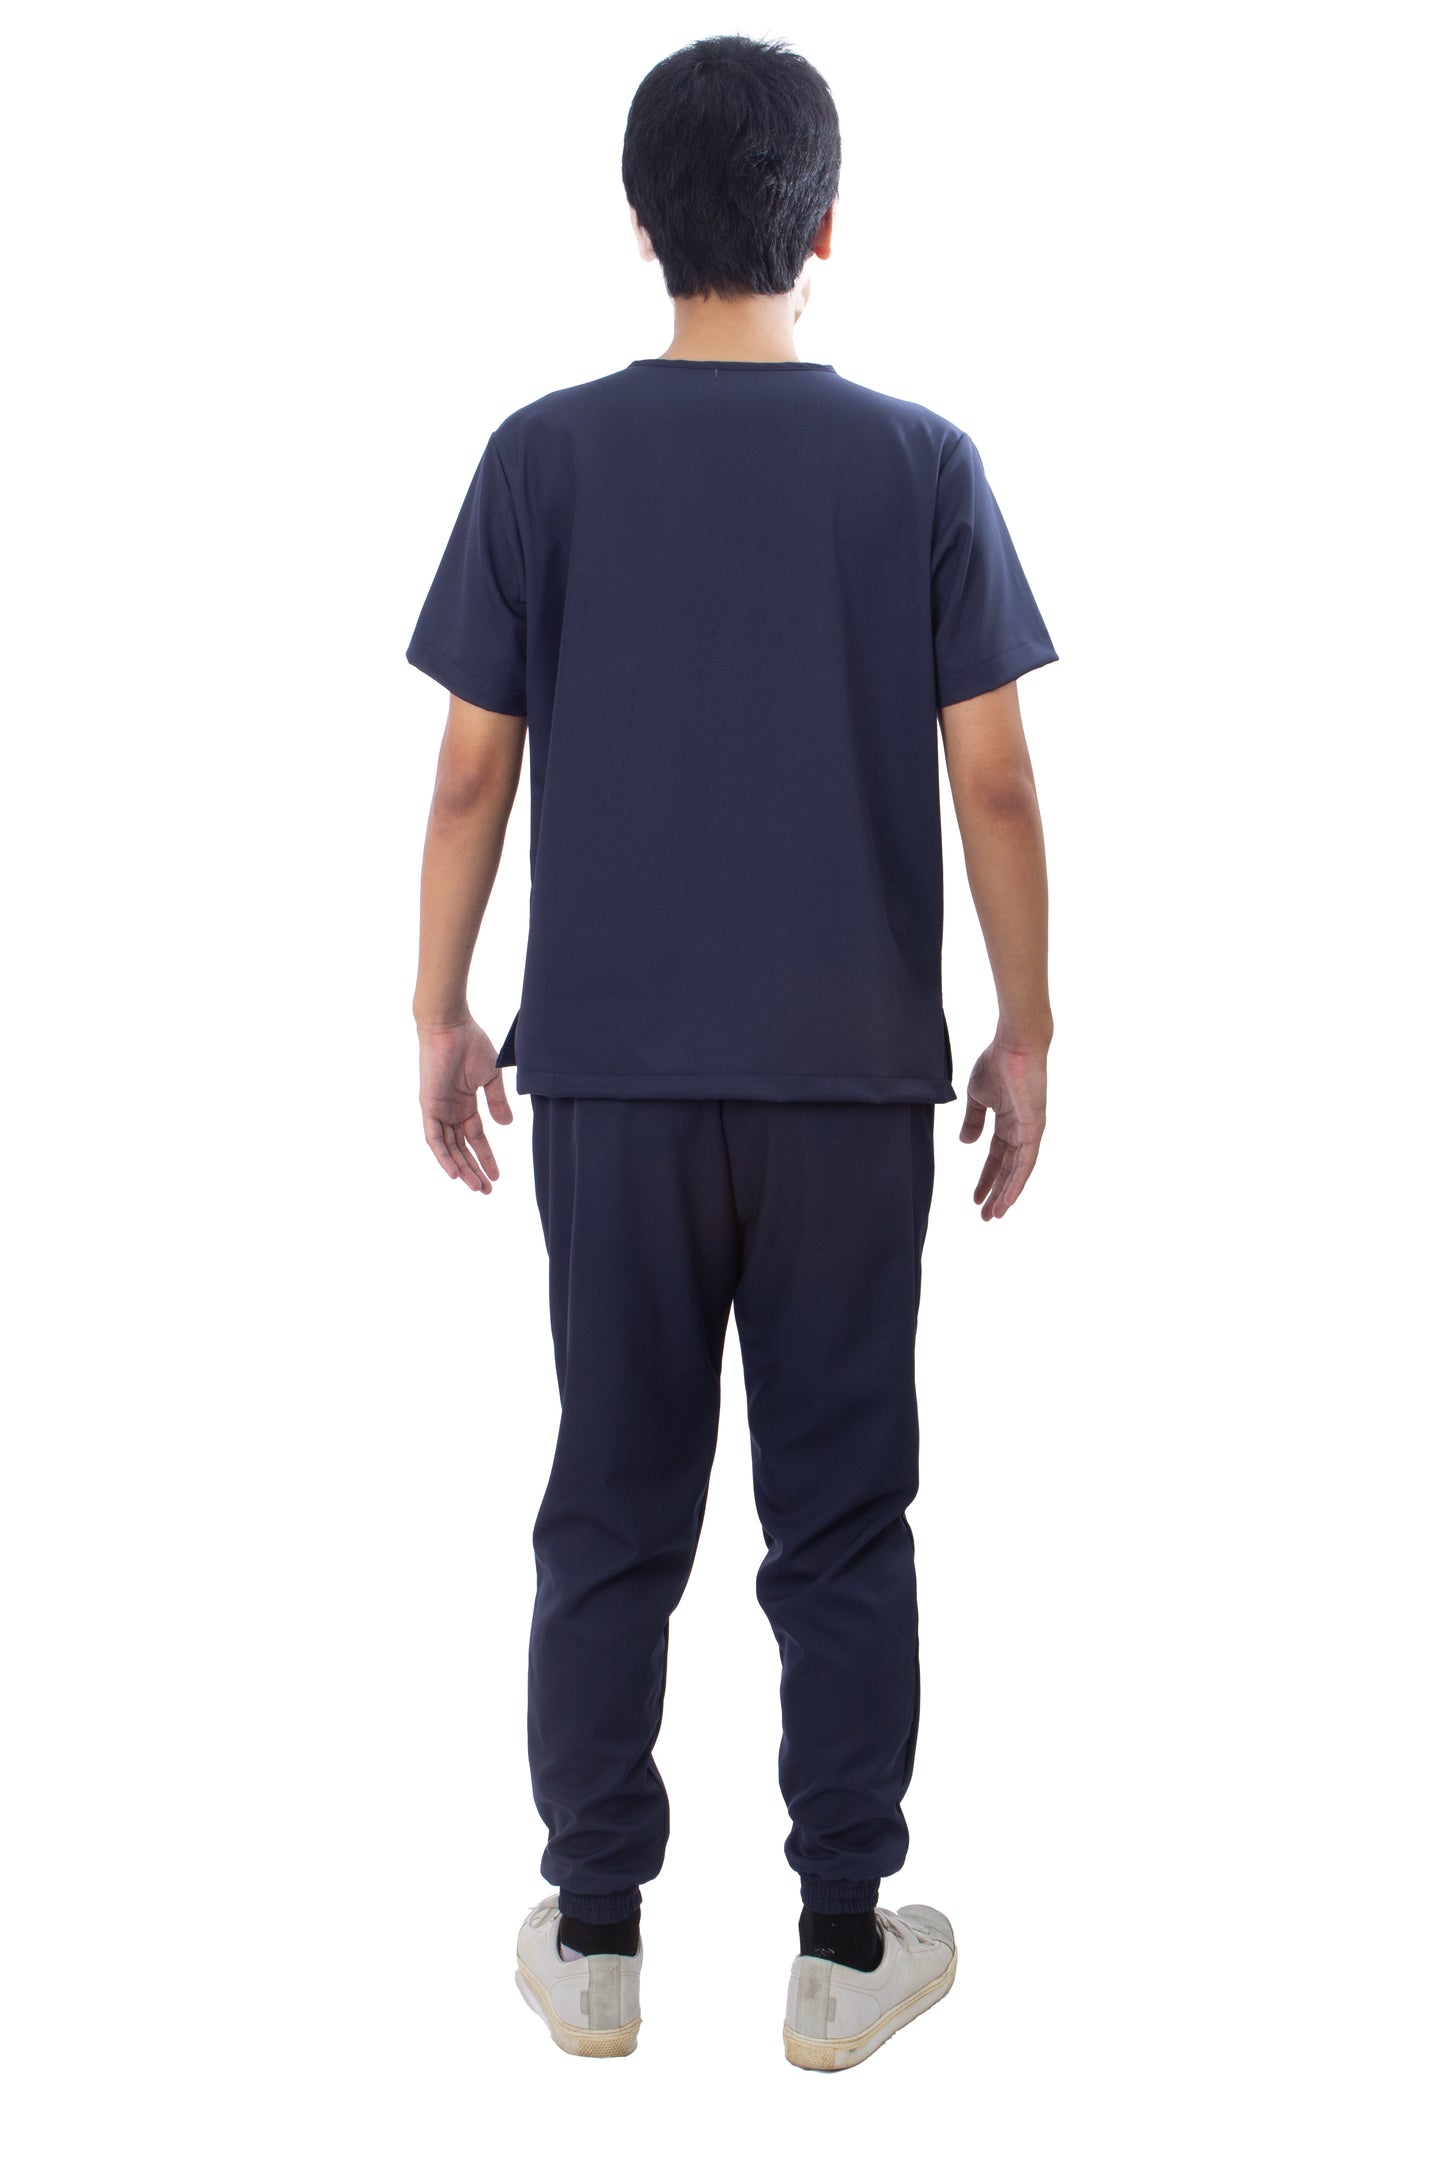 Scrub Suit Set - Navy Blue (Unisex)